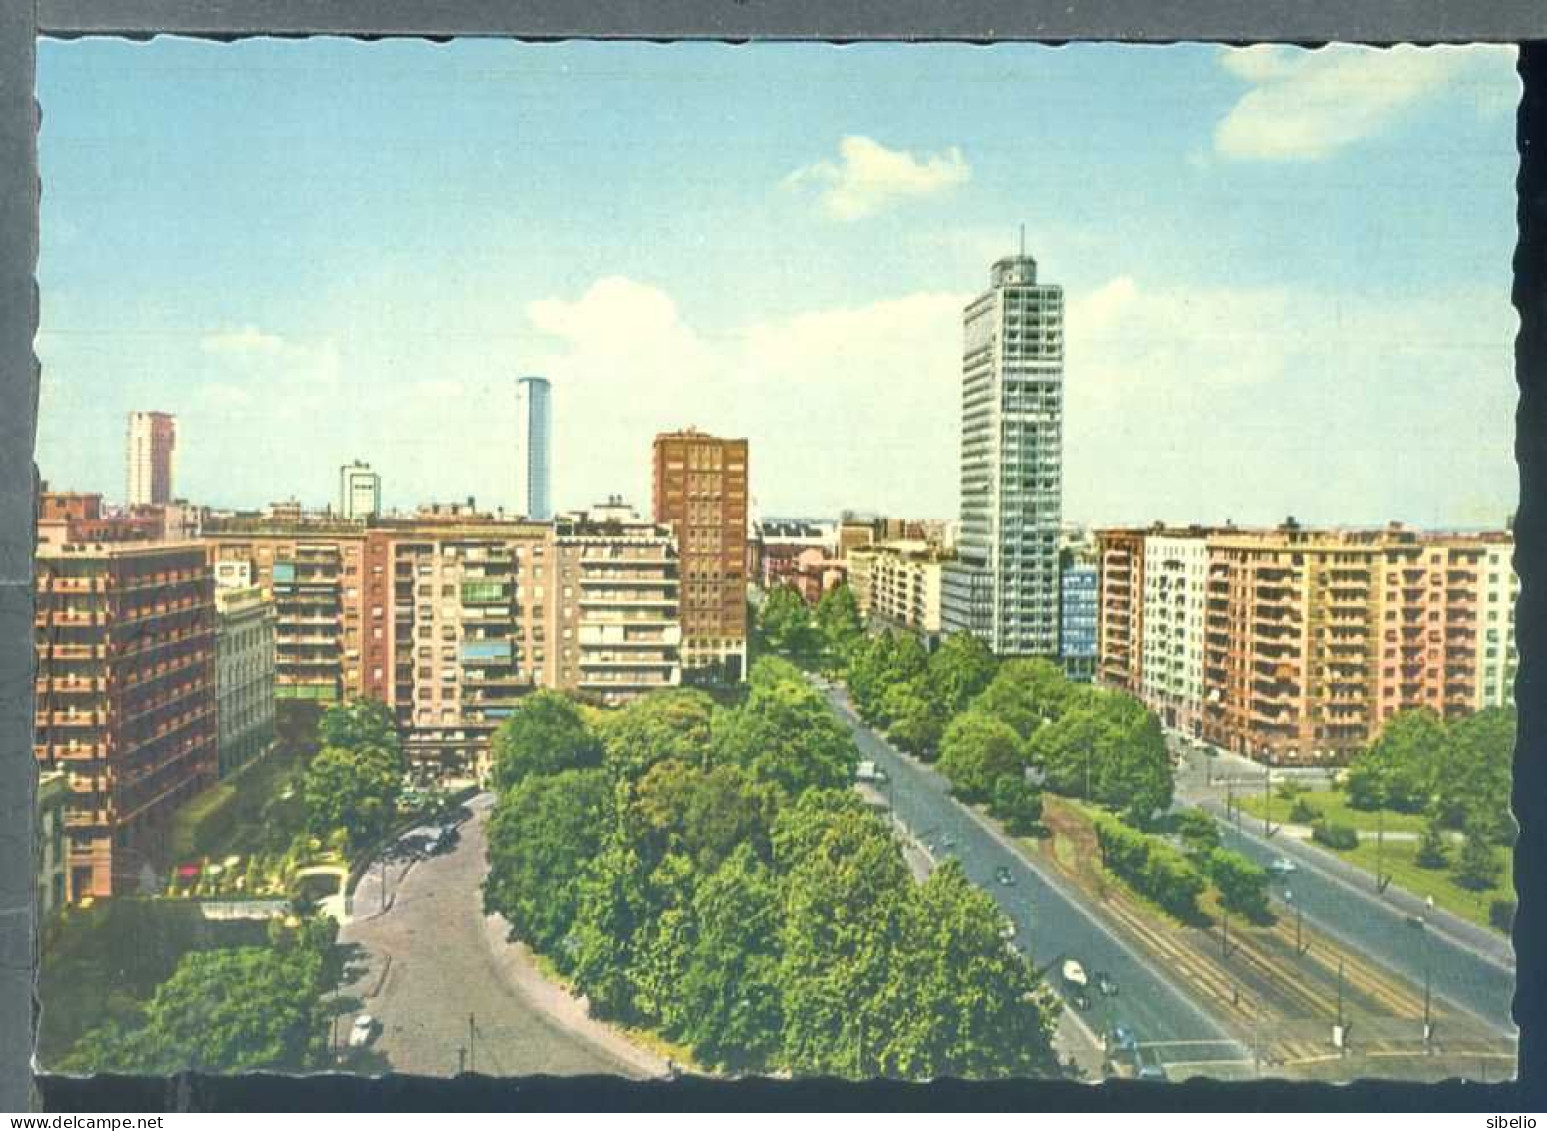 Milano - dieci cartoline semimoderne - rif. 1